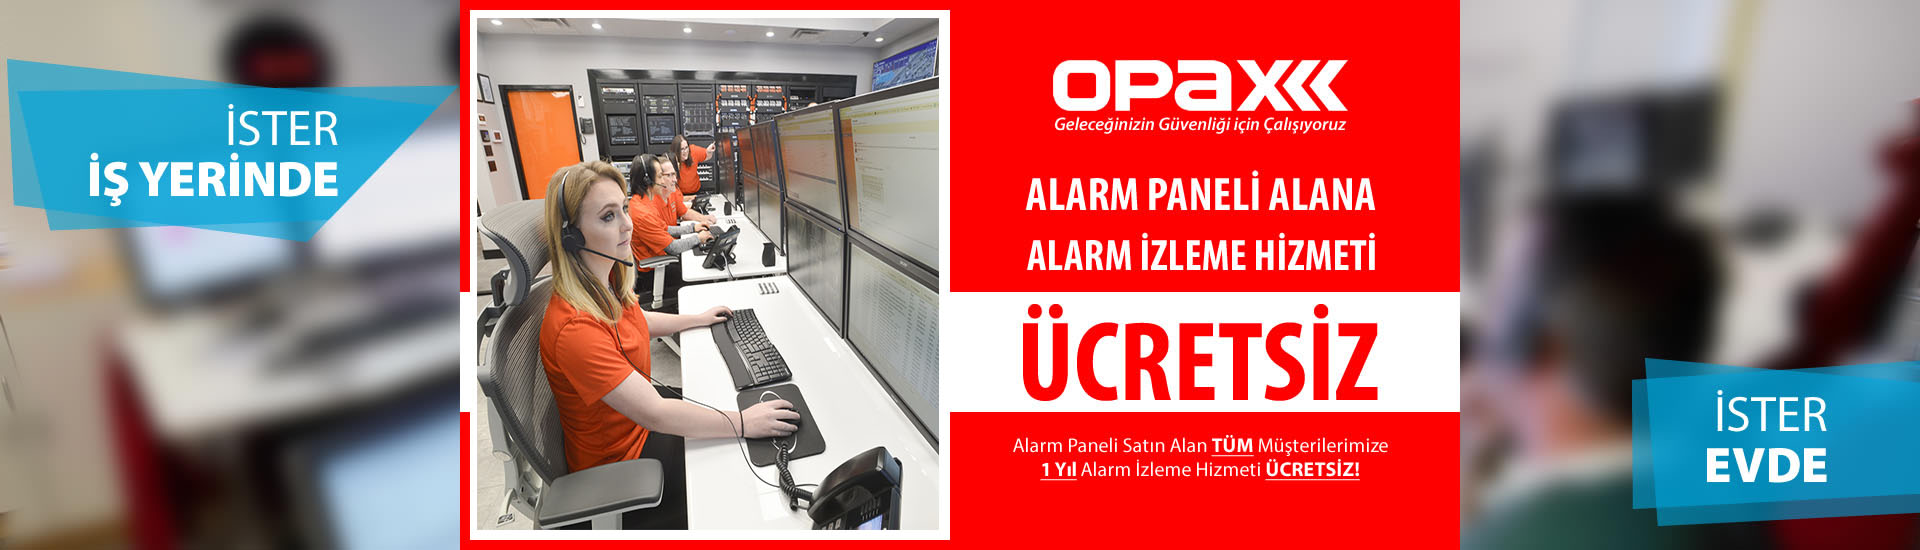 opax haberalam sistemi 1 yıl ücretsiz, opax alarm sistemi, kablolu alarm sistemi, gprs alarm sistemi